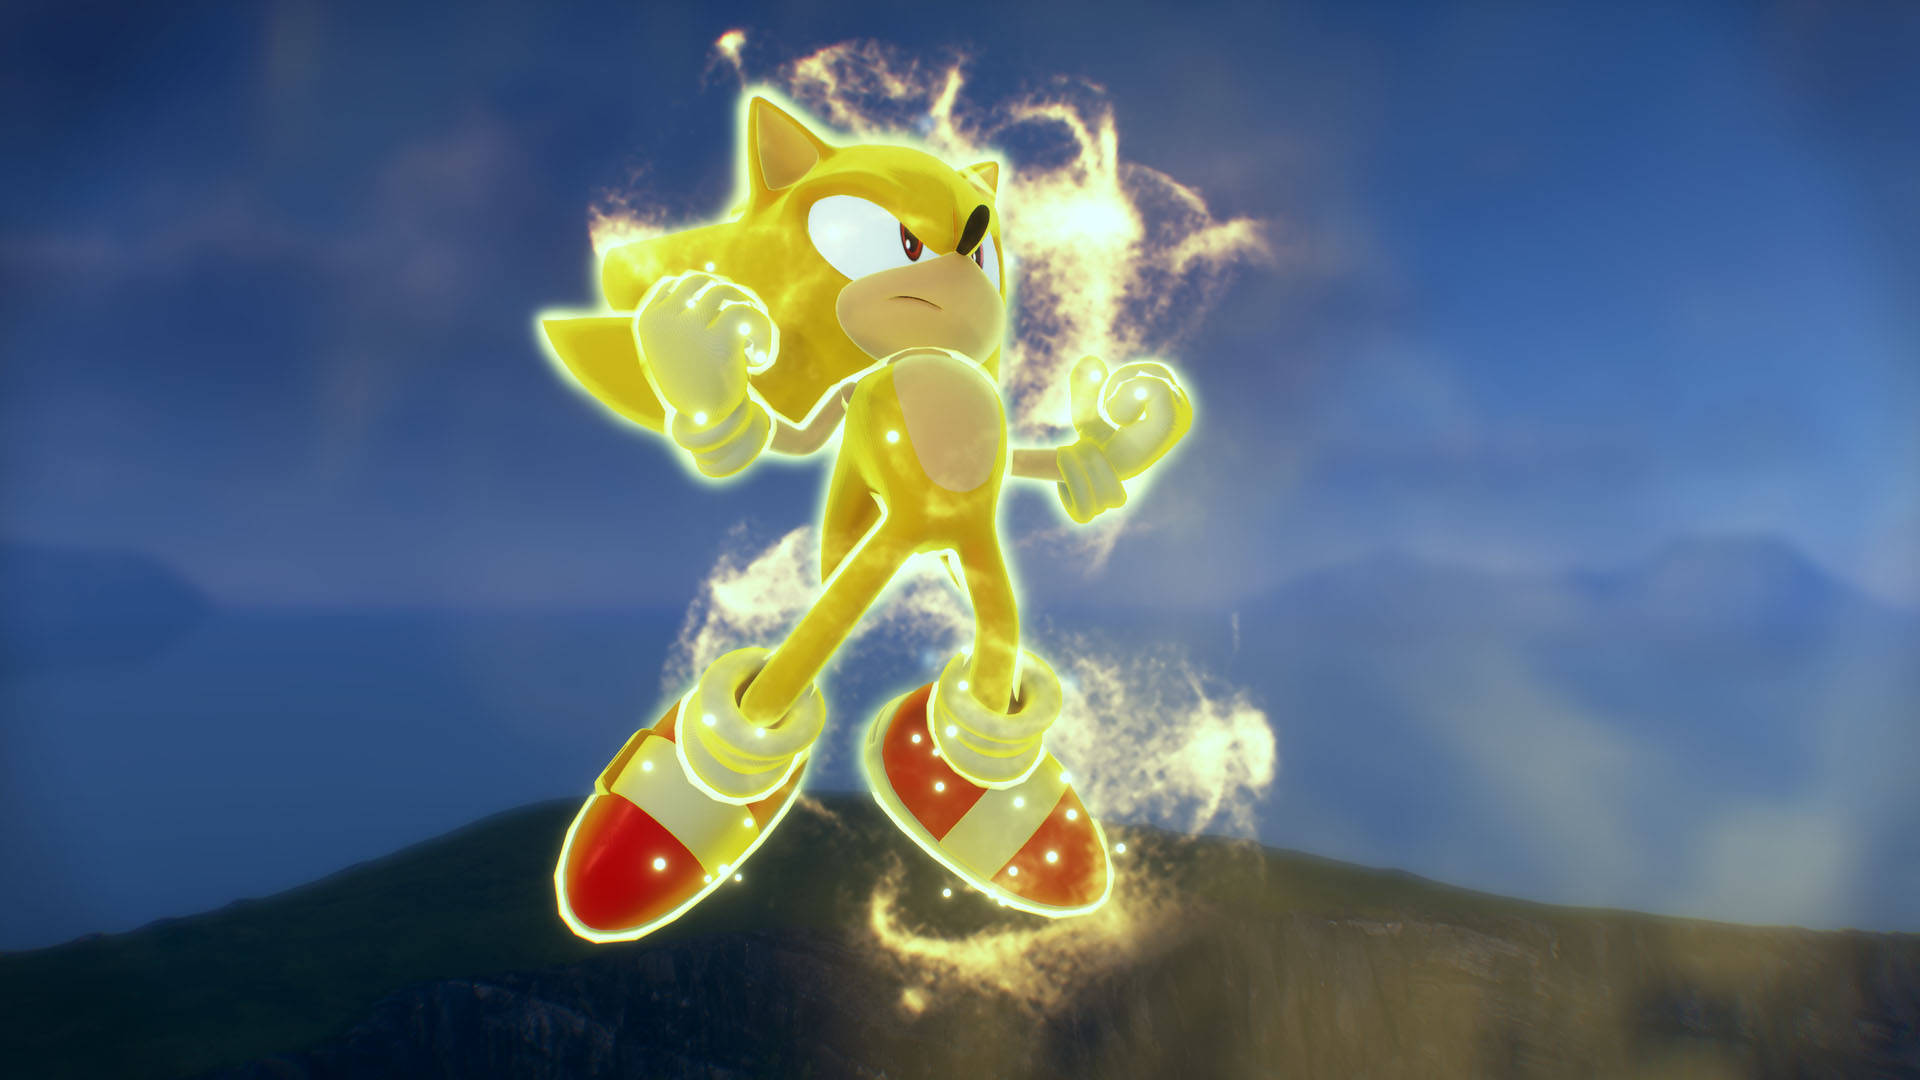 Sonic the Hedgehog - Cool Sonic Wallpaper